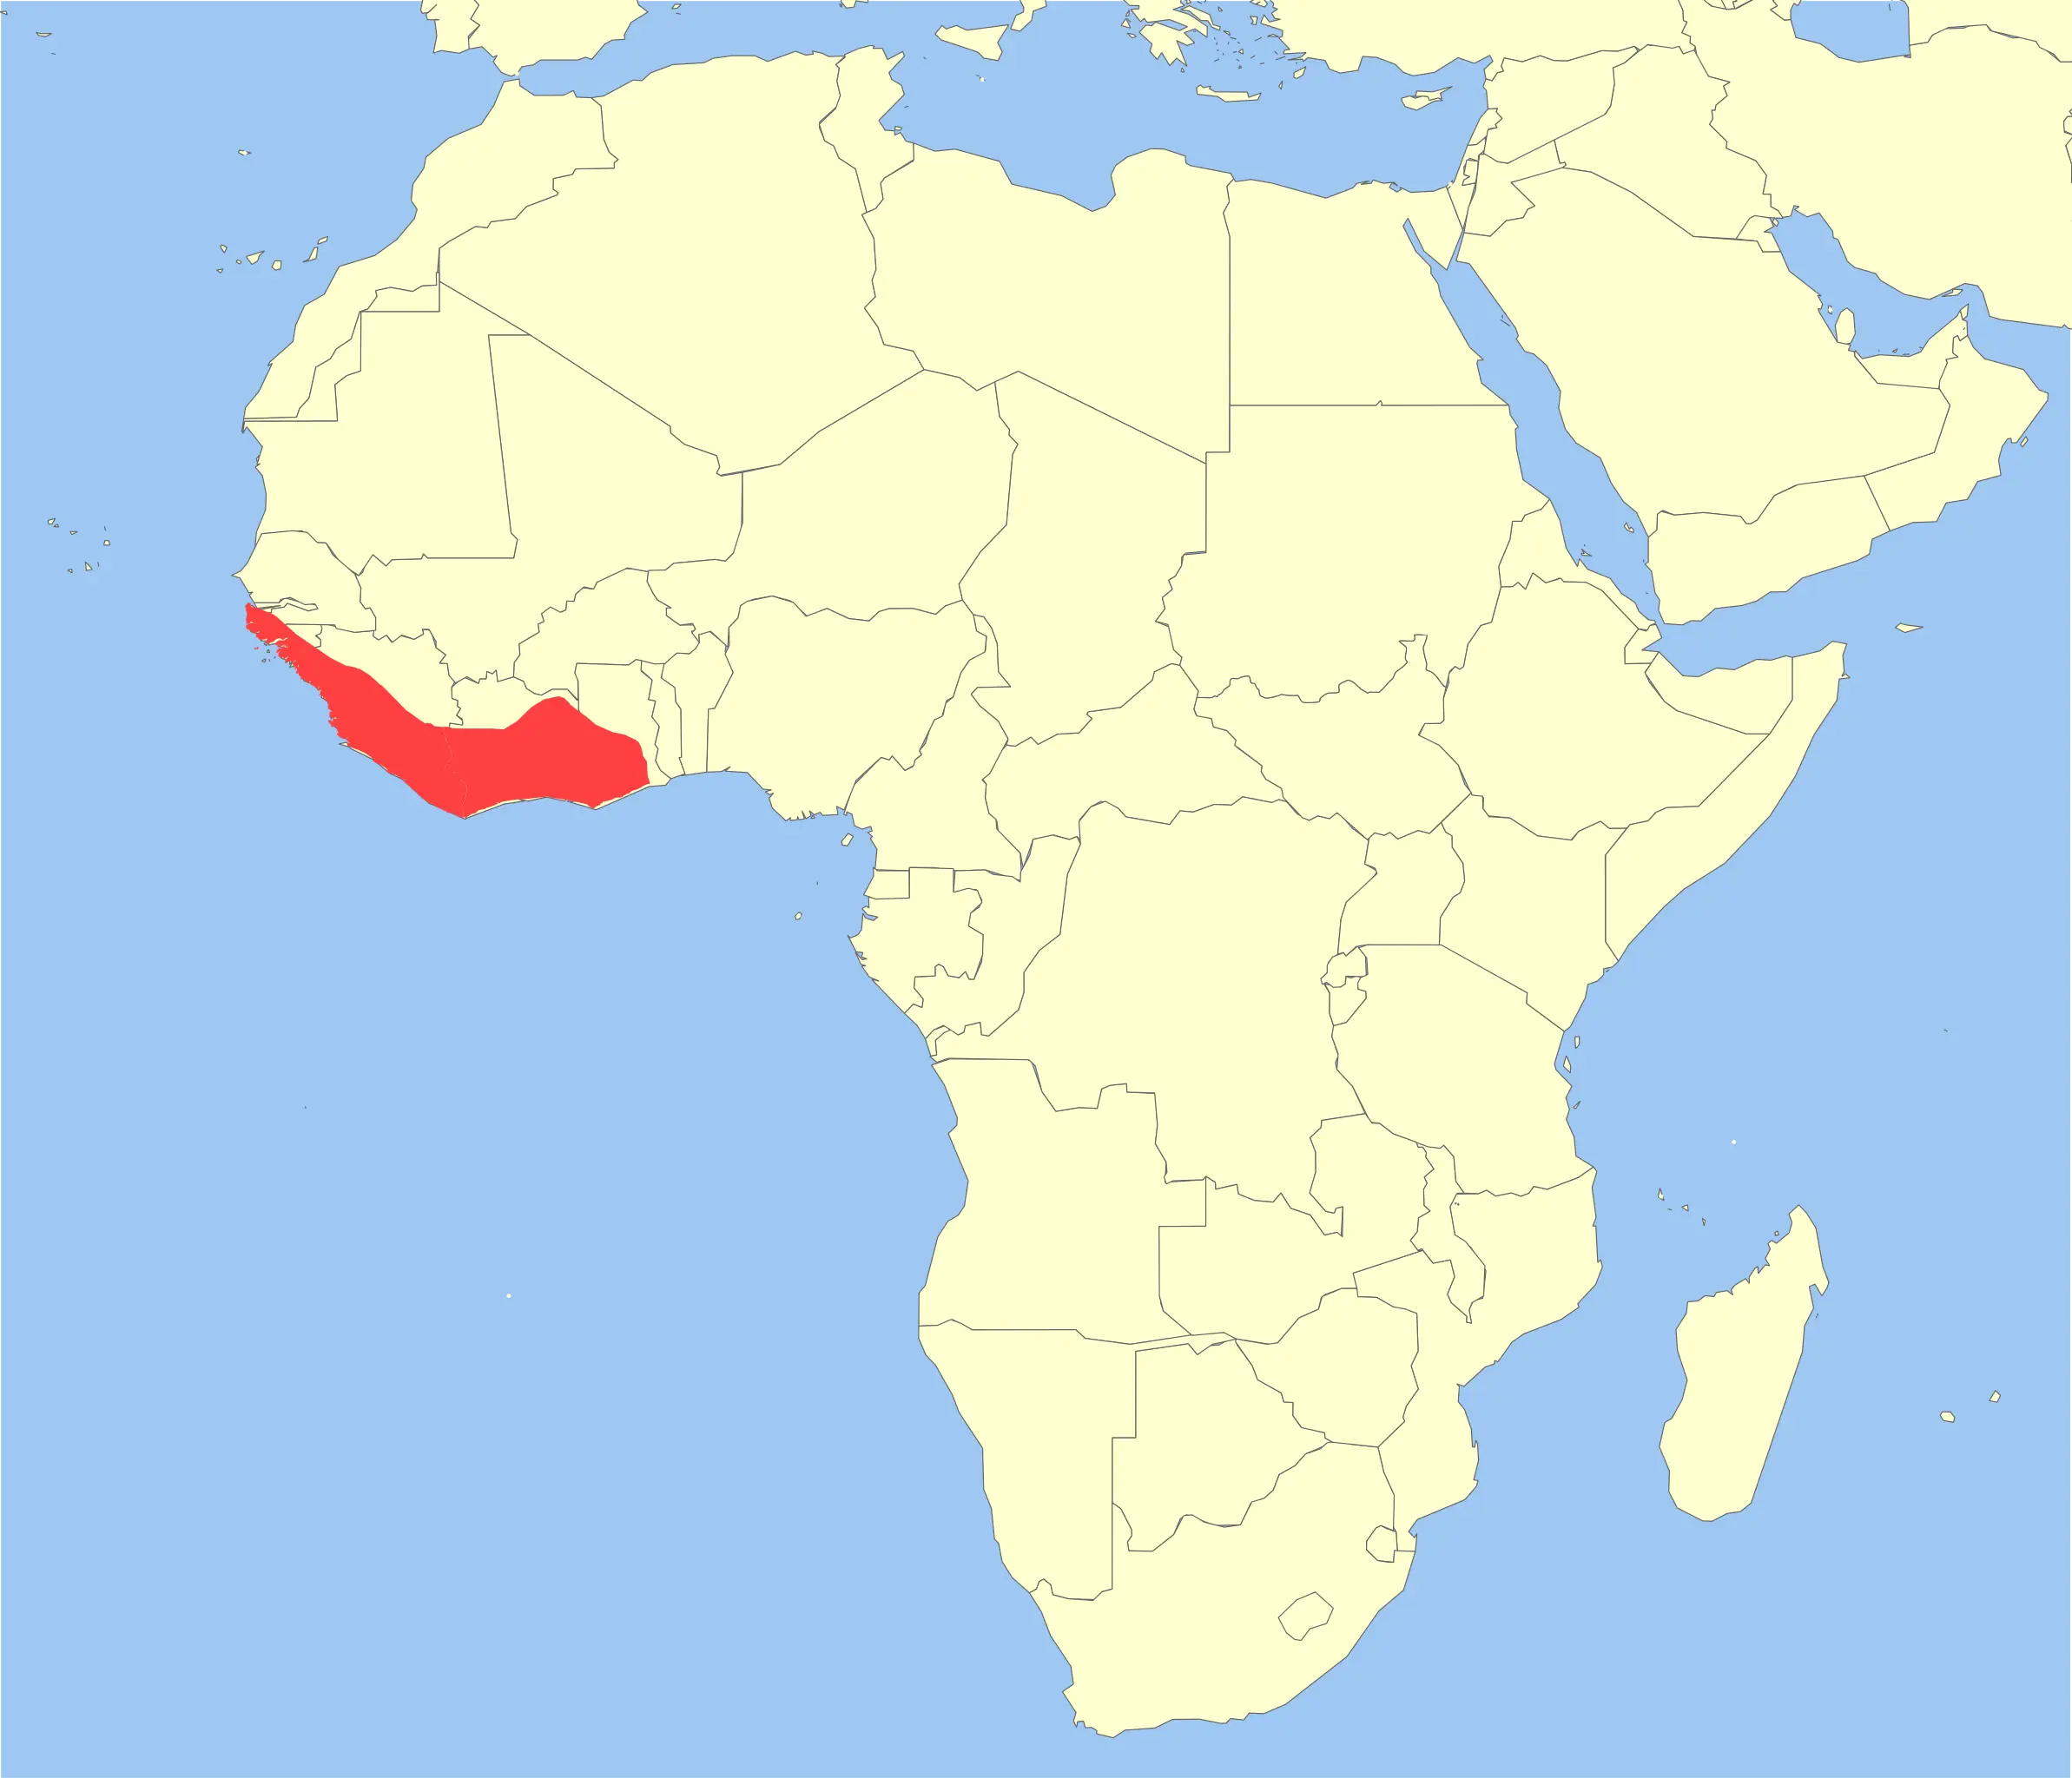 Campbell's mona monkey habitat map